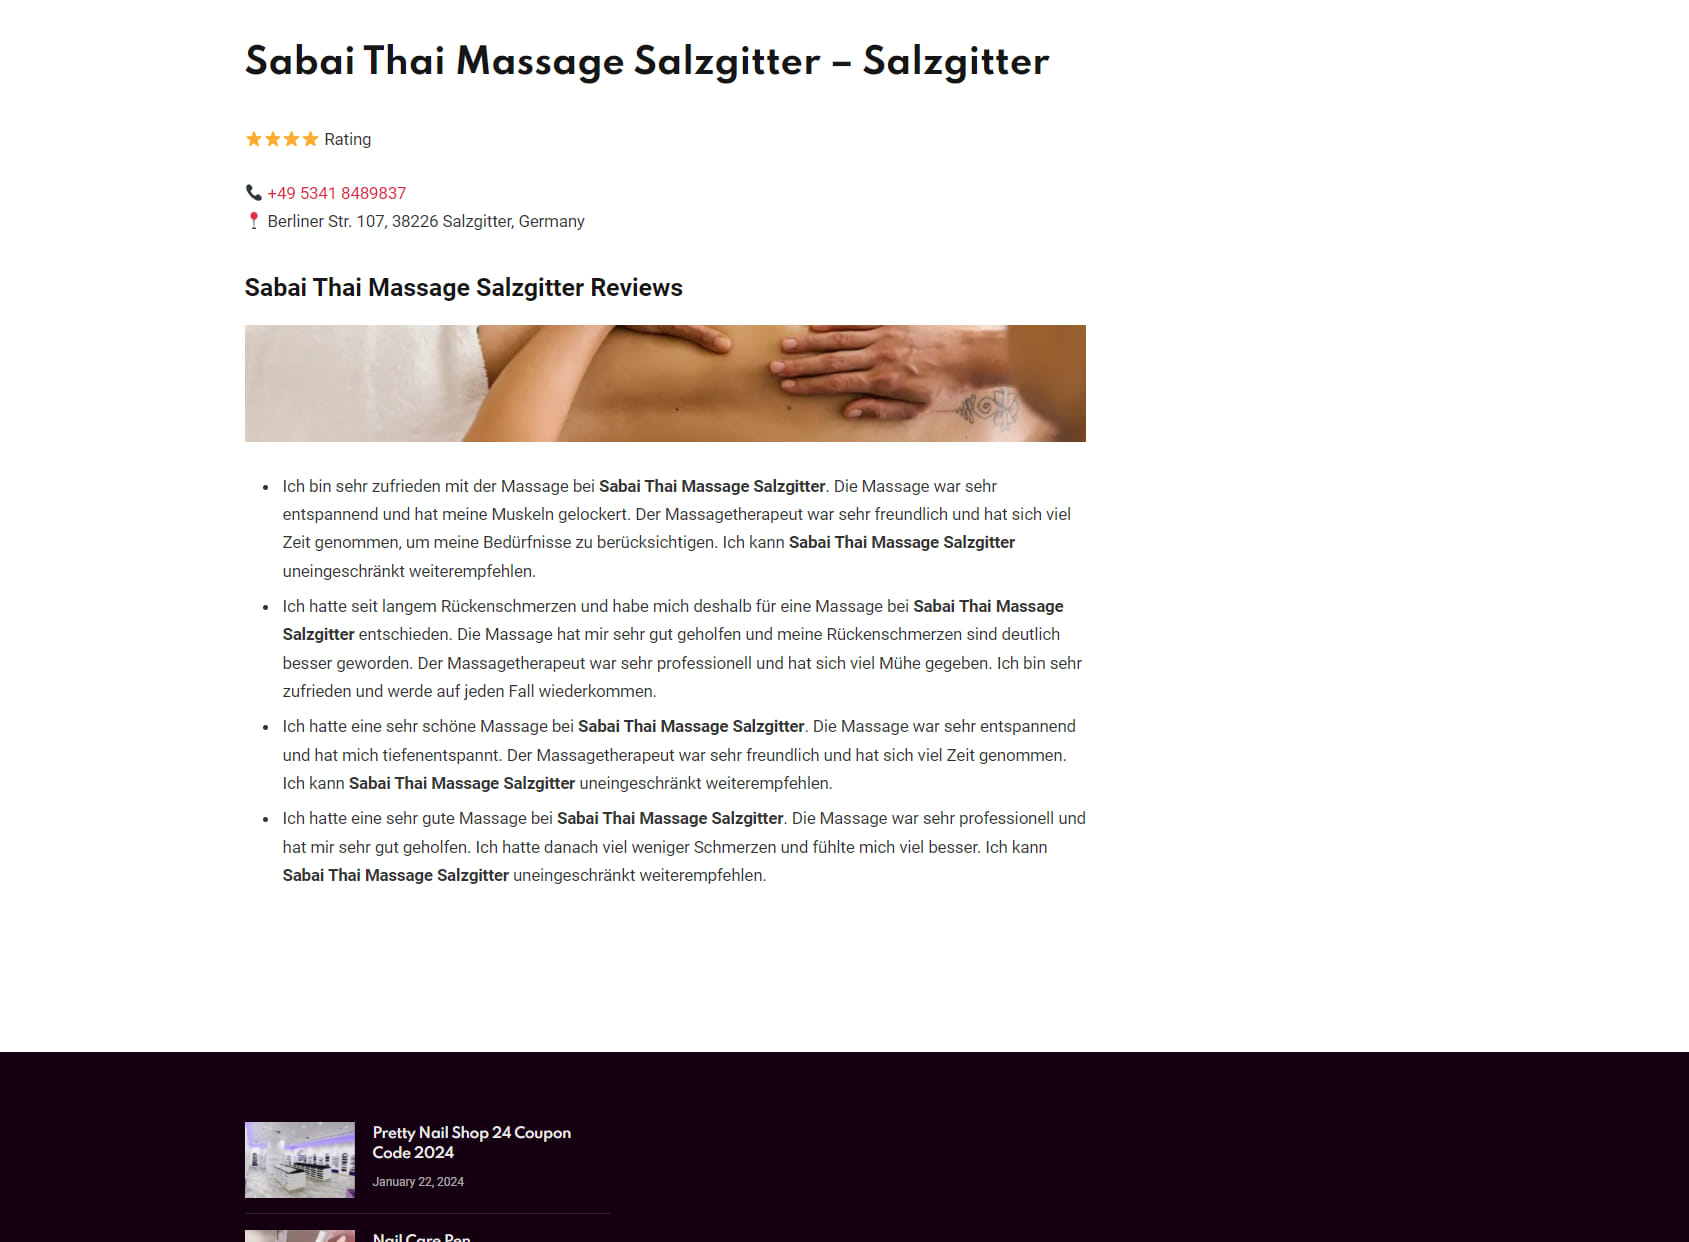 Sabai Thai Massage - Salzgitter